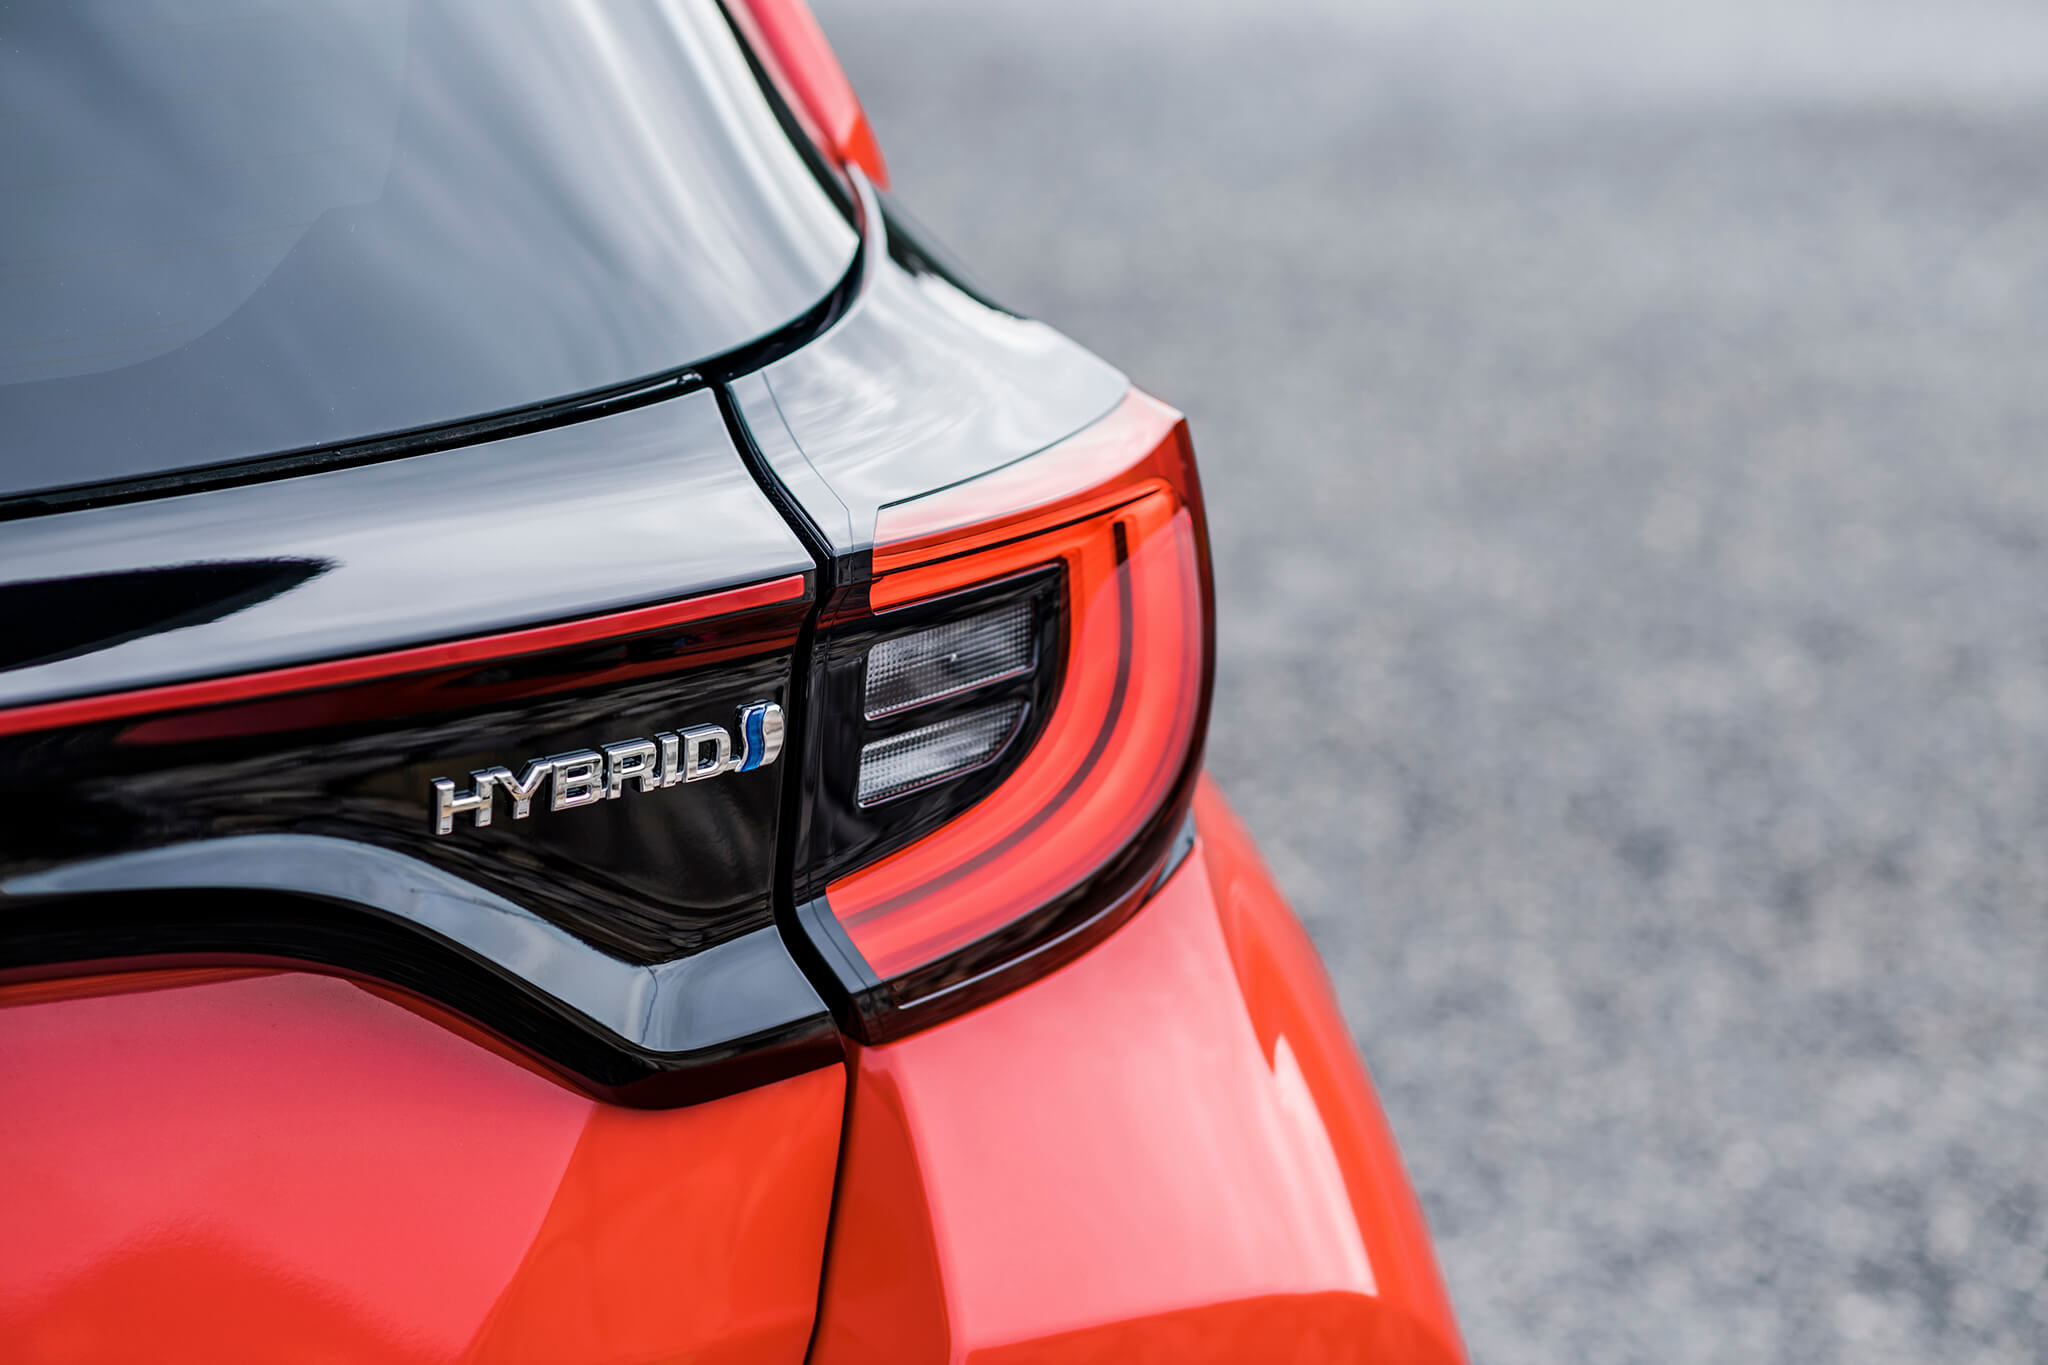 Toyota Yaris Hybrid 2020